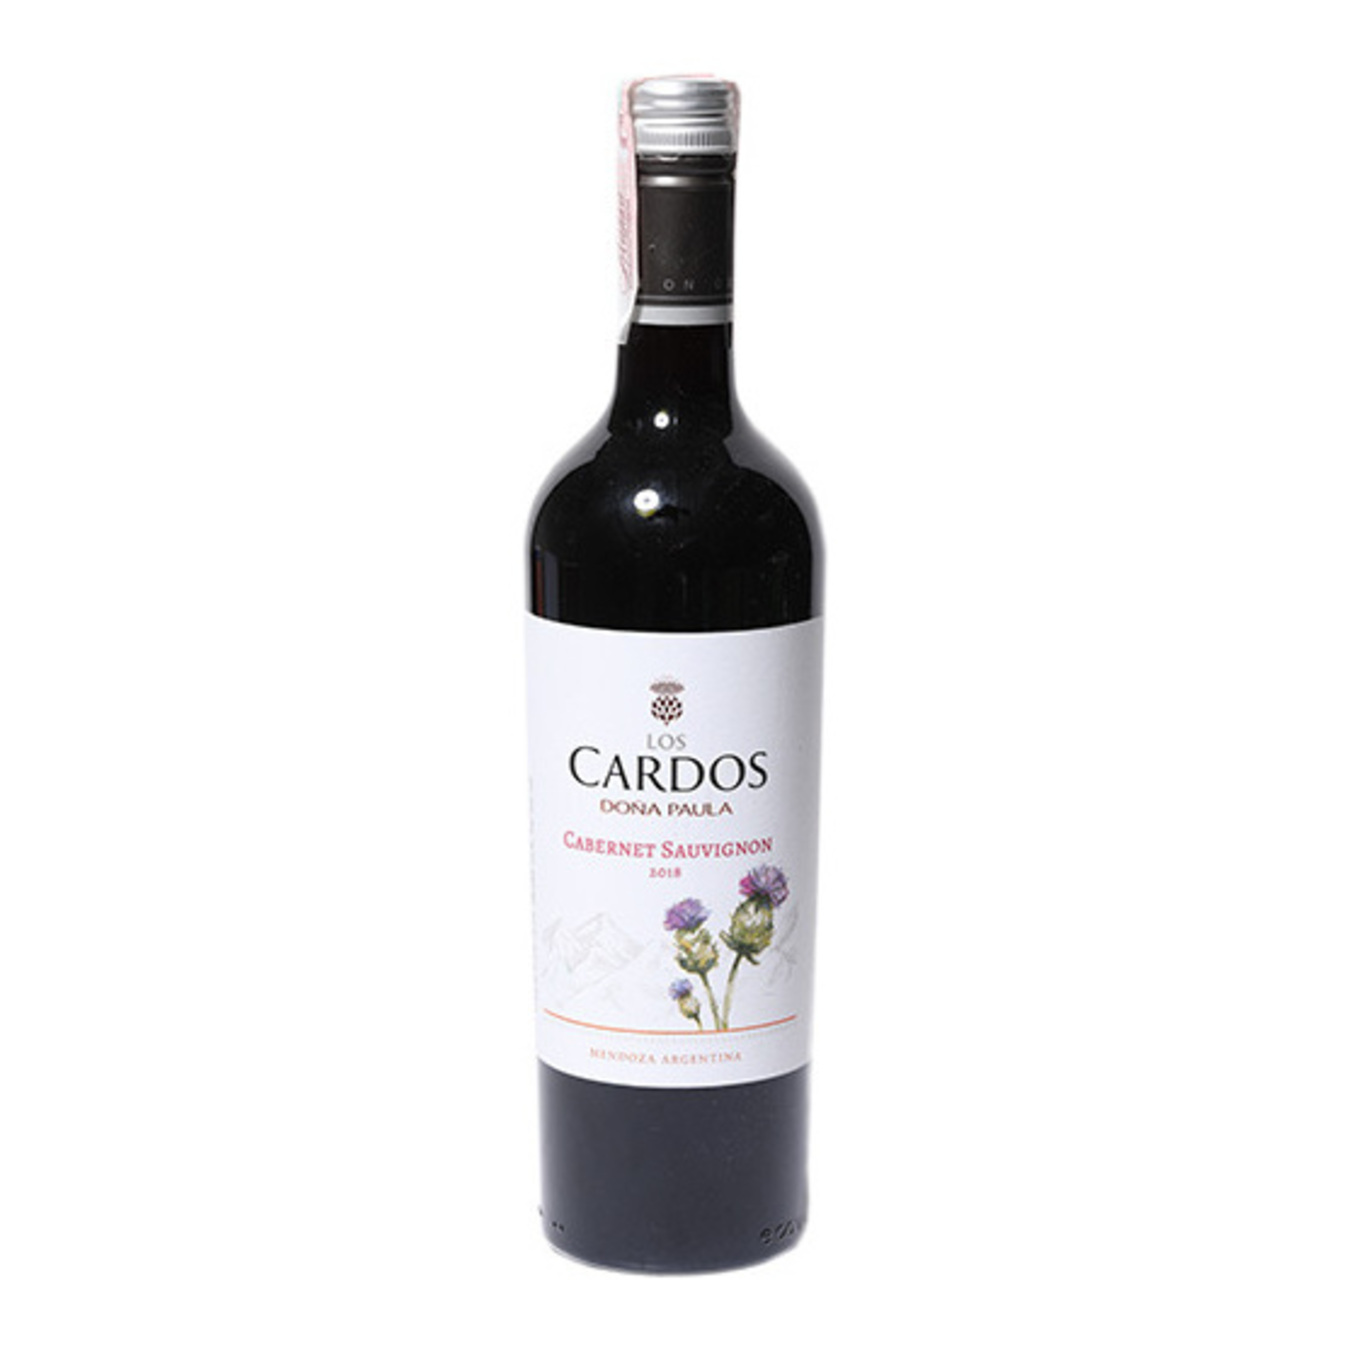 Вино Los Cardos Cabernet Sauvignon Mendoza біле сухе 13,5% 0,75л